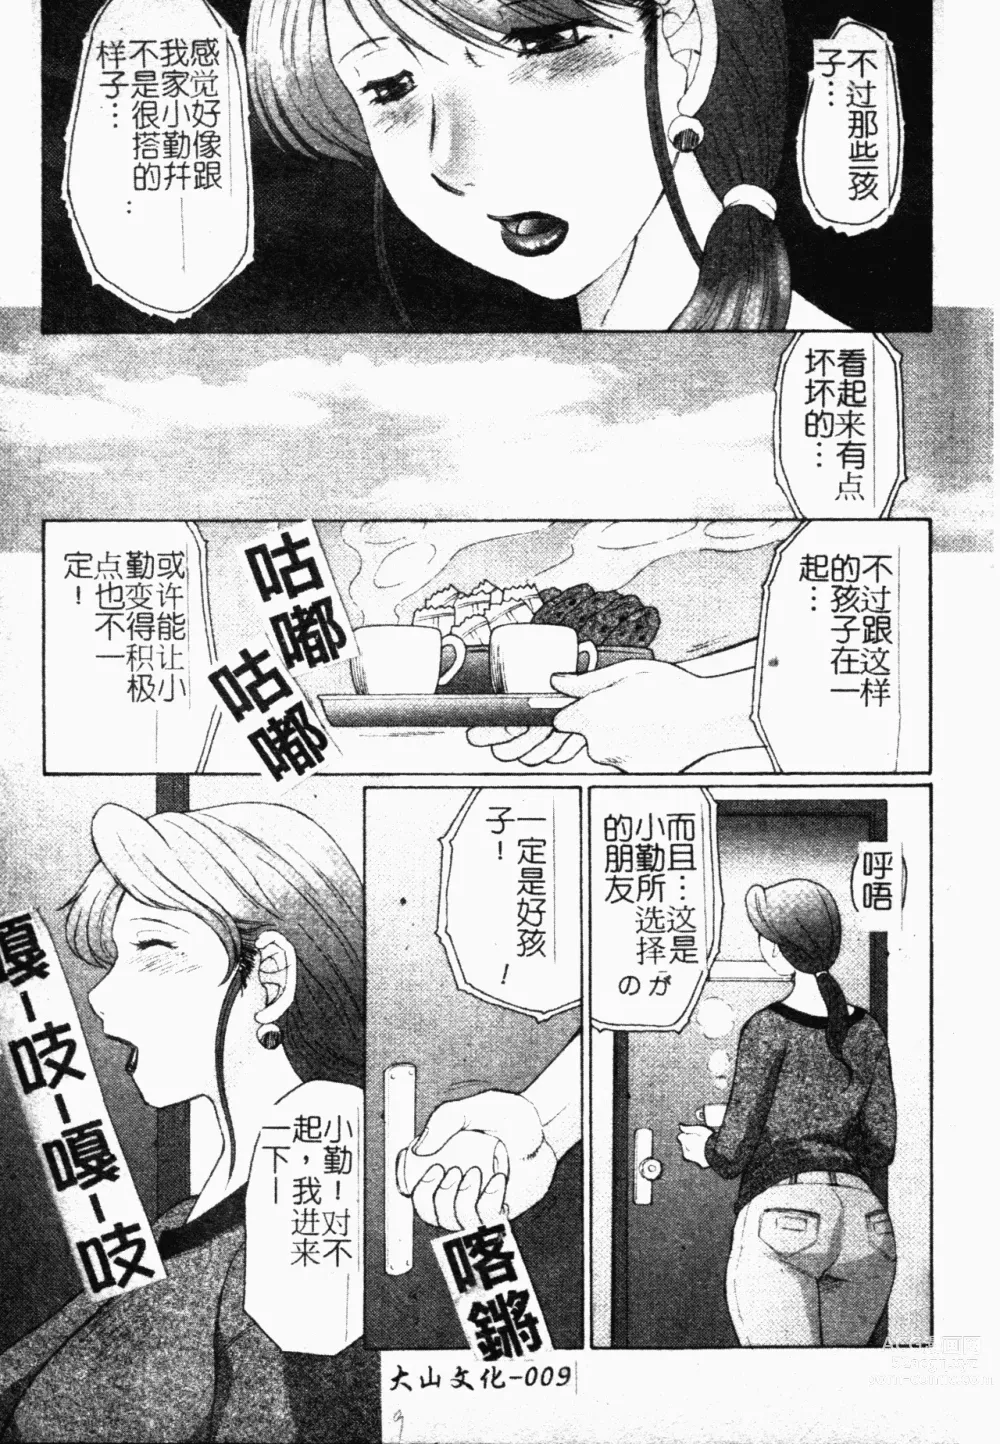 Page 9 of manga Haha Mamire